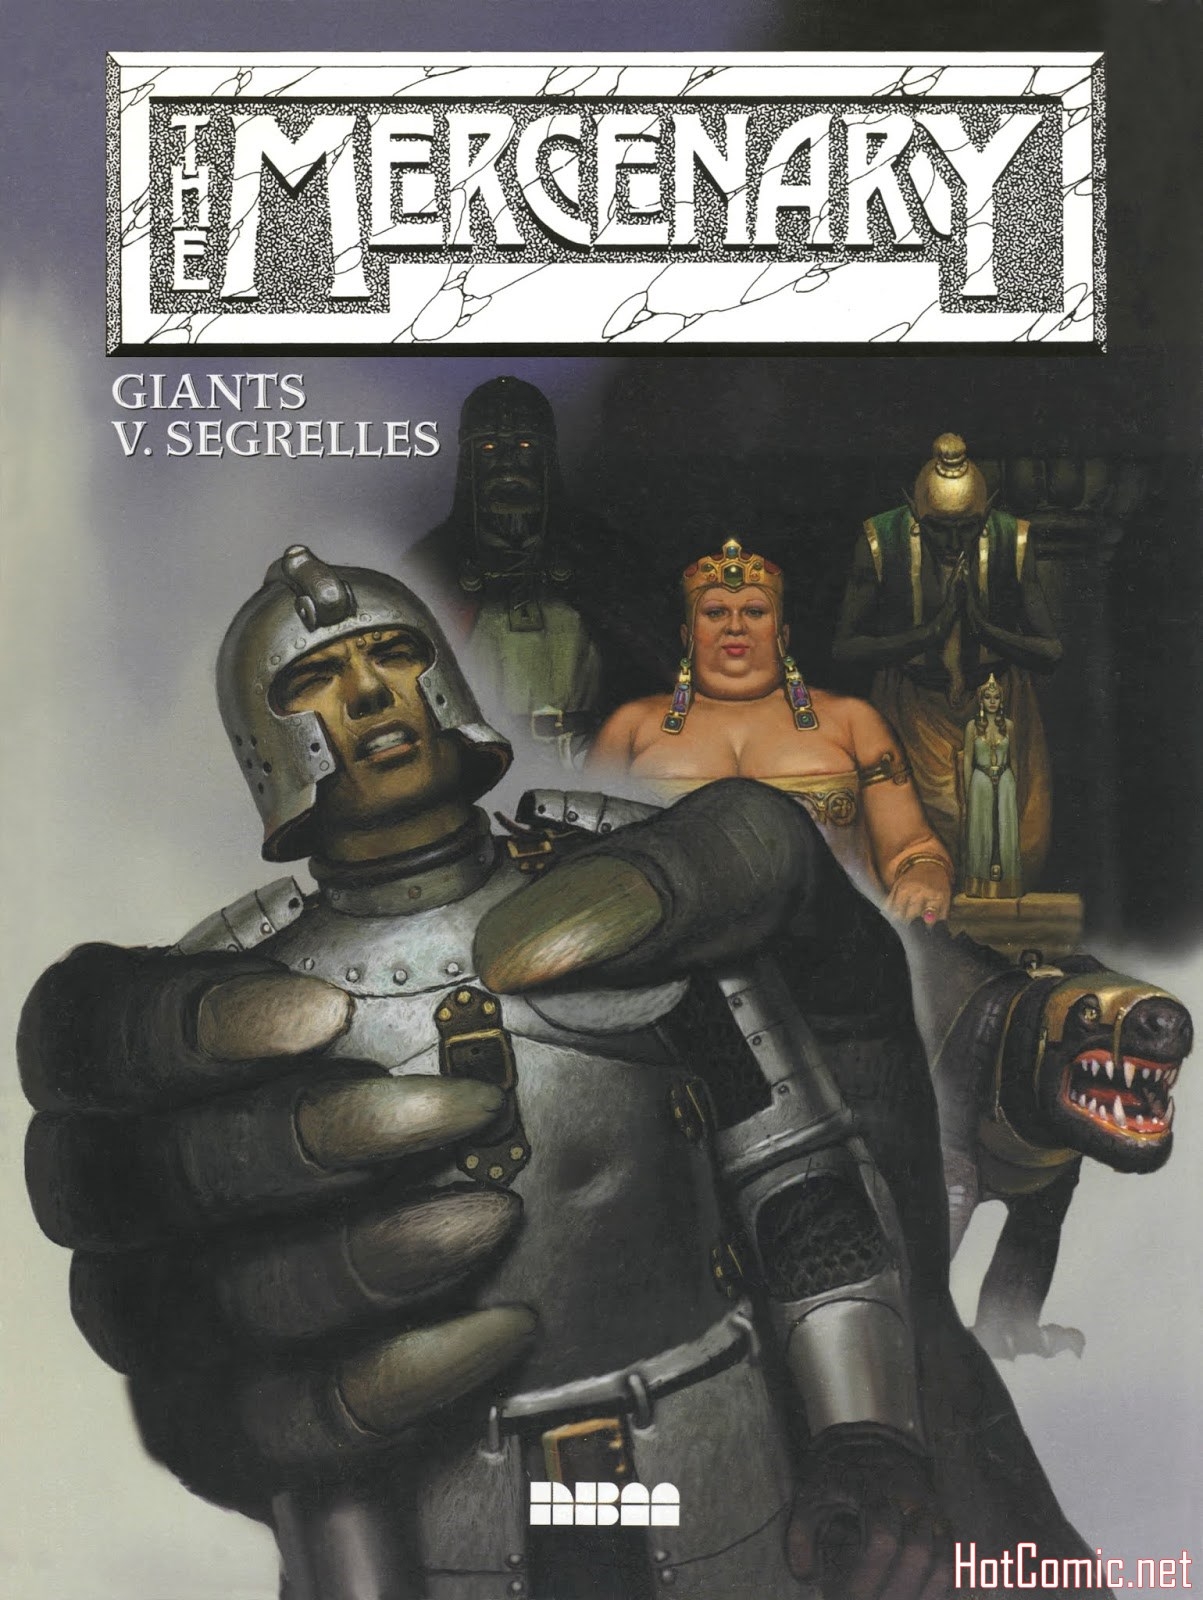 [Vicente Segrellés] The Mercenary 9 - Giants [English] 0